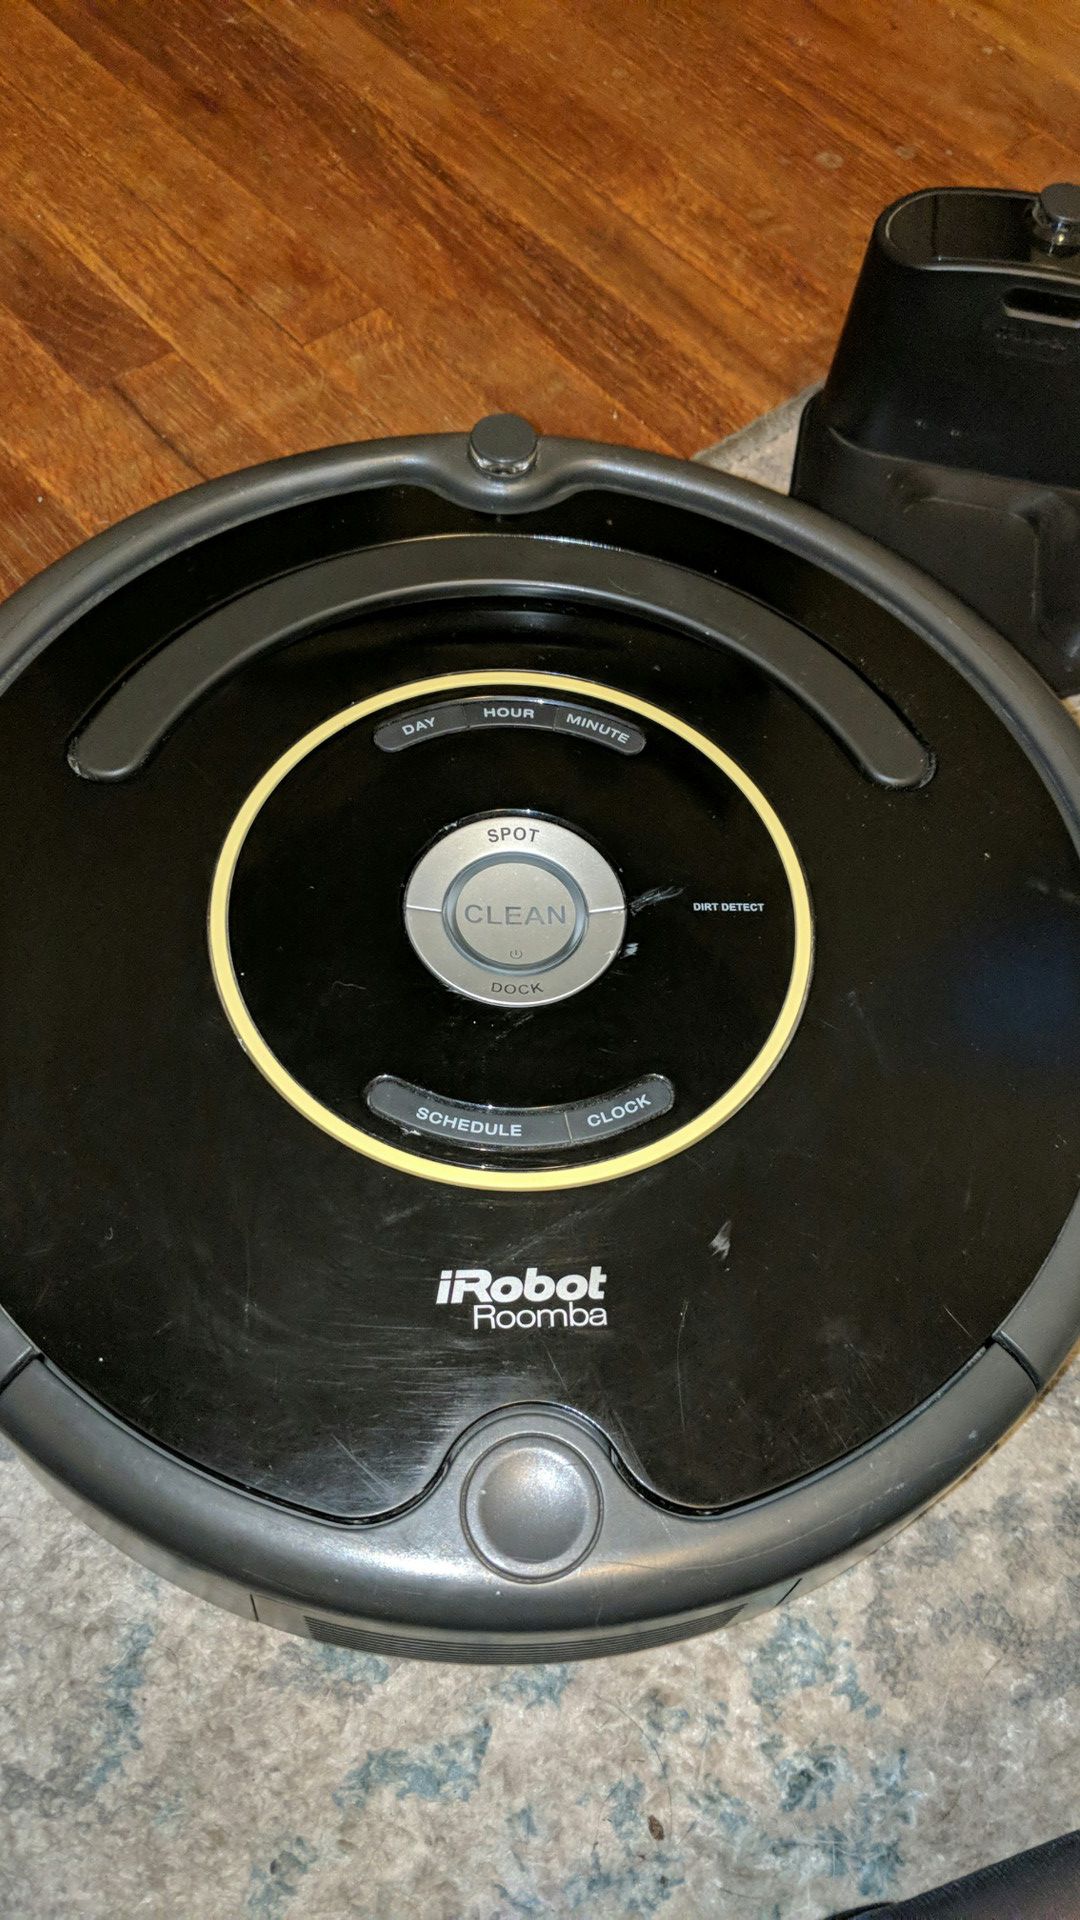 iRobot Roomba 650 vacuum cleaning robot